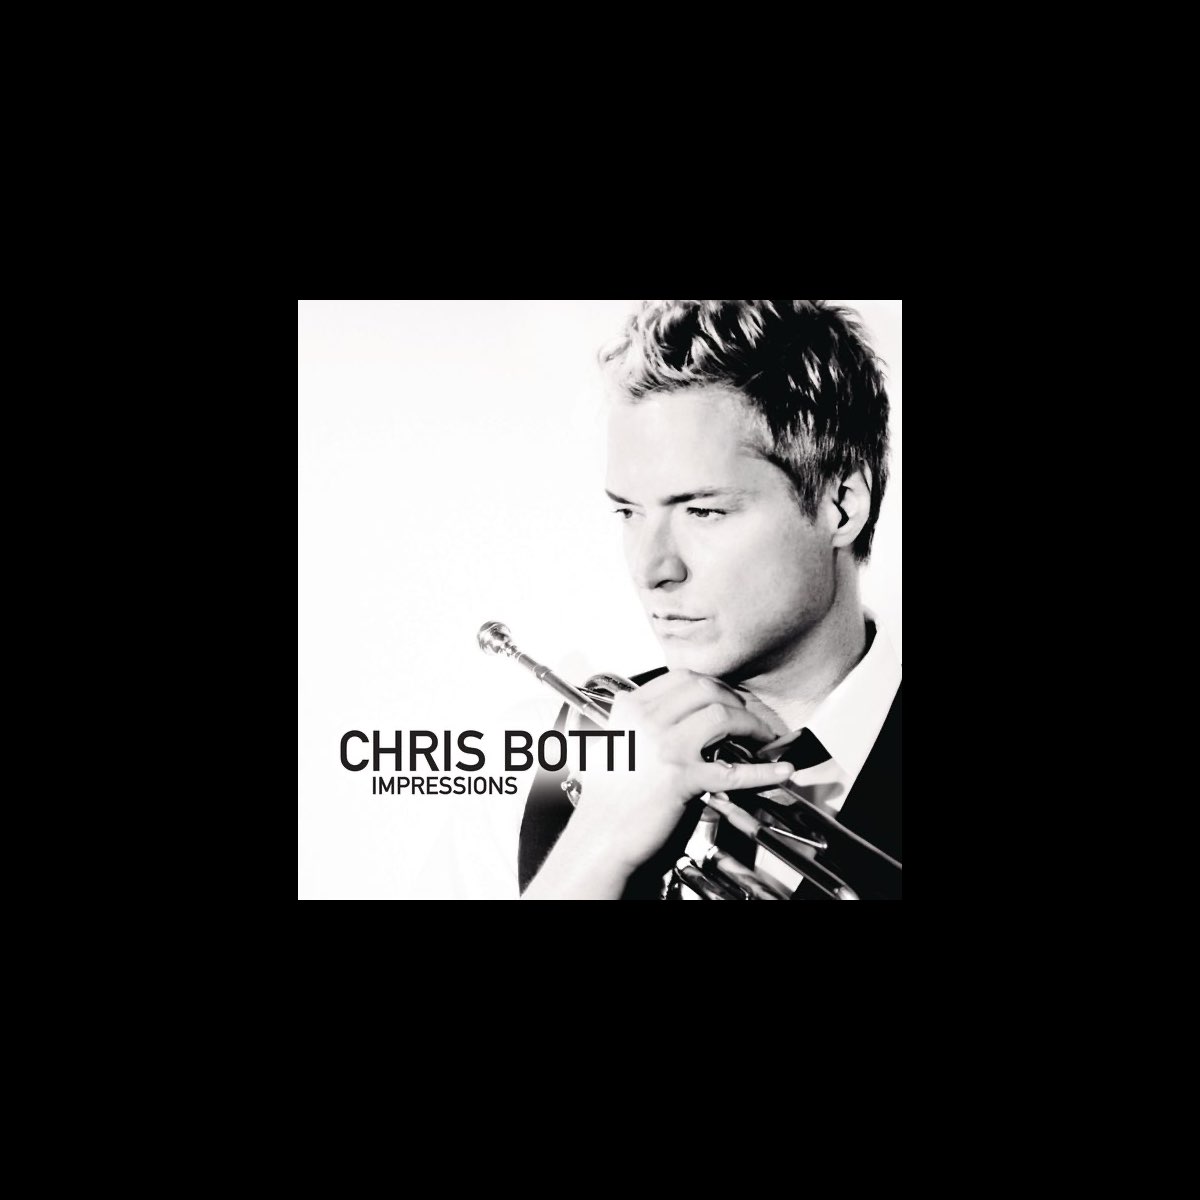 Impressions by Chris Botti on Apple Music